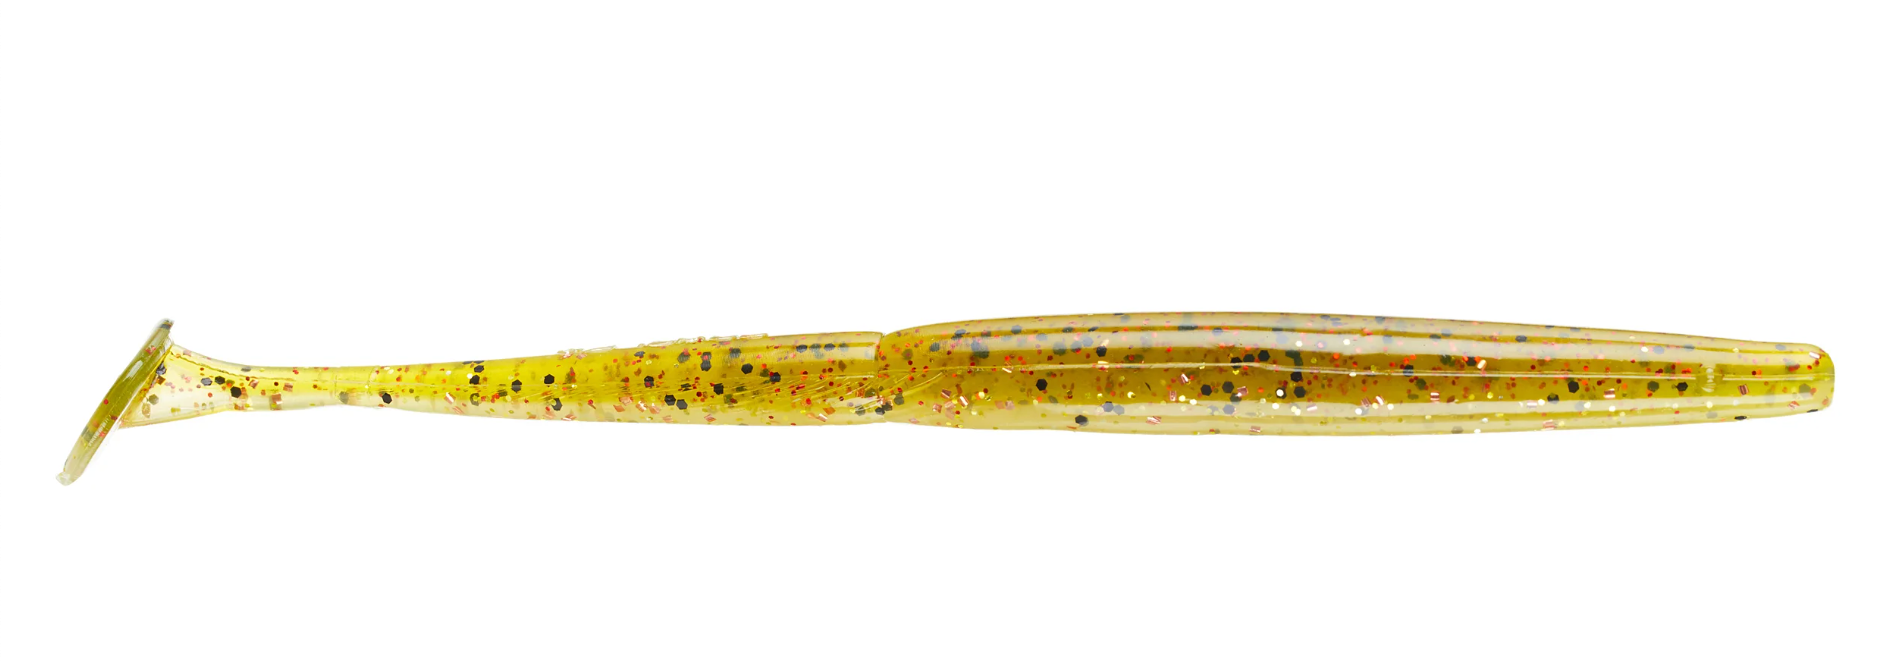 Gambler Slim EZ Paddle Tail Swimbait, 6 inch, Copperfield, Bronze